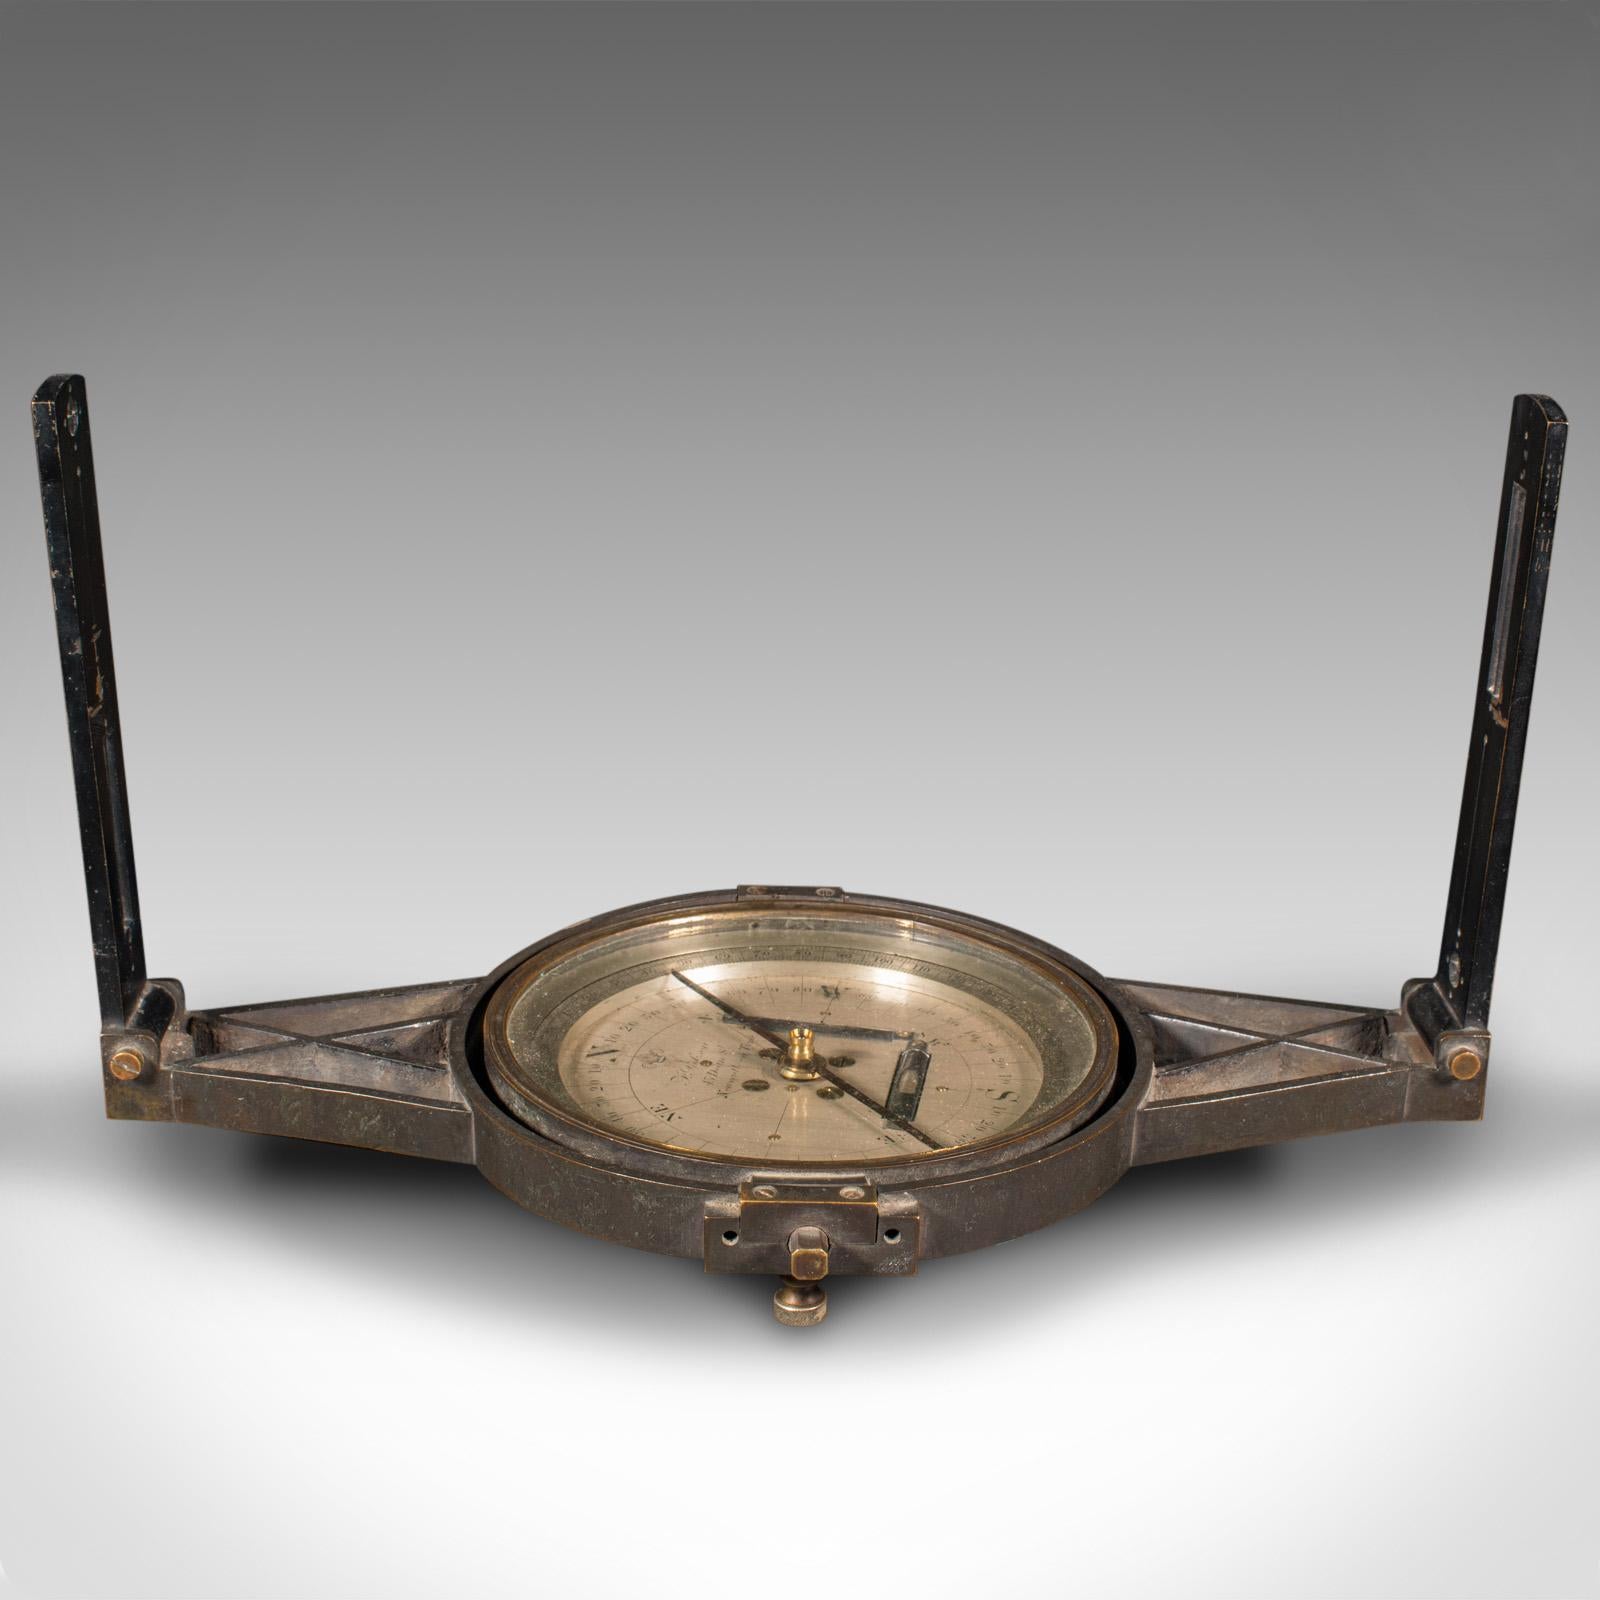 British Antique Gimballed Compass, English, Brass Scientific Instrument, Victorian, 1900